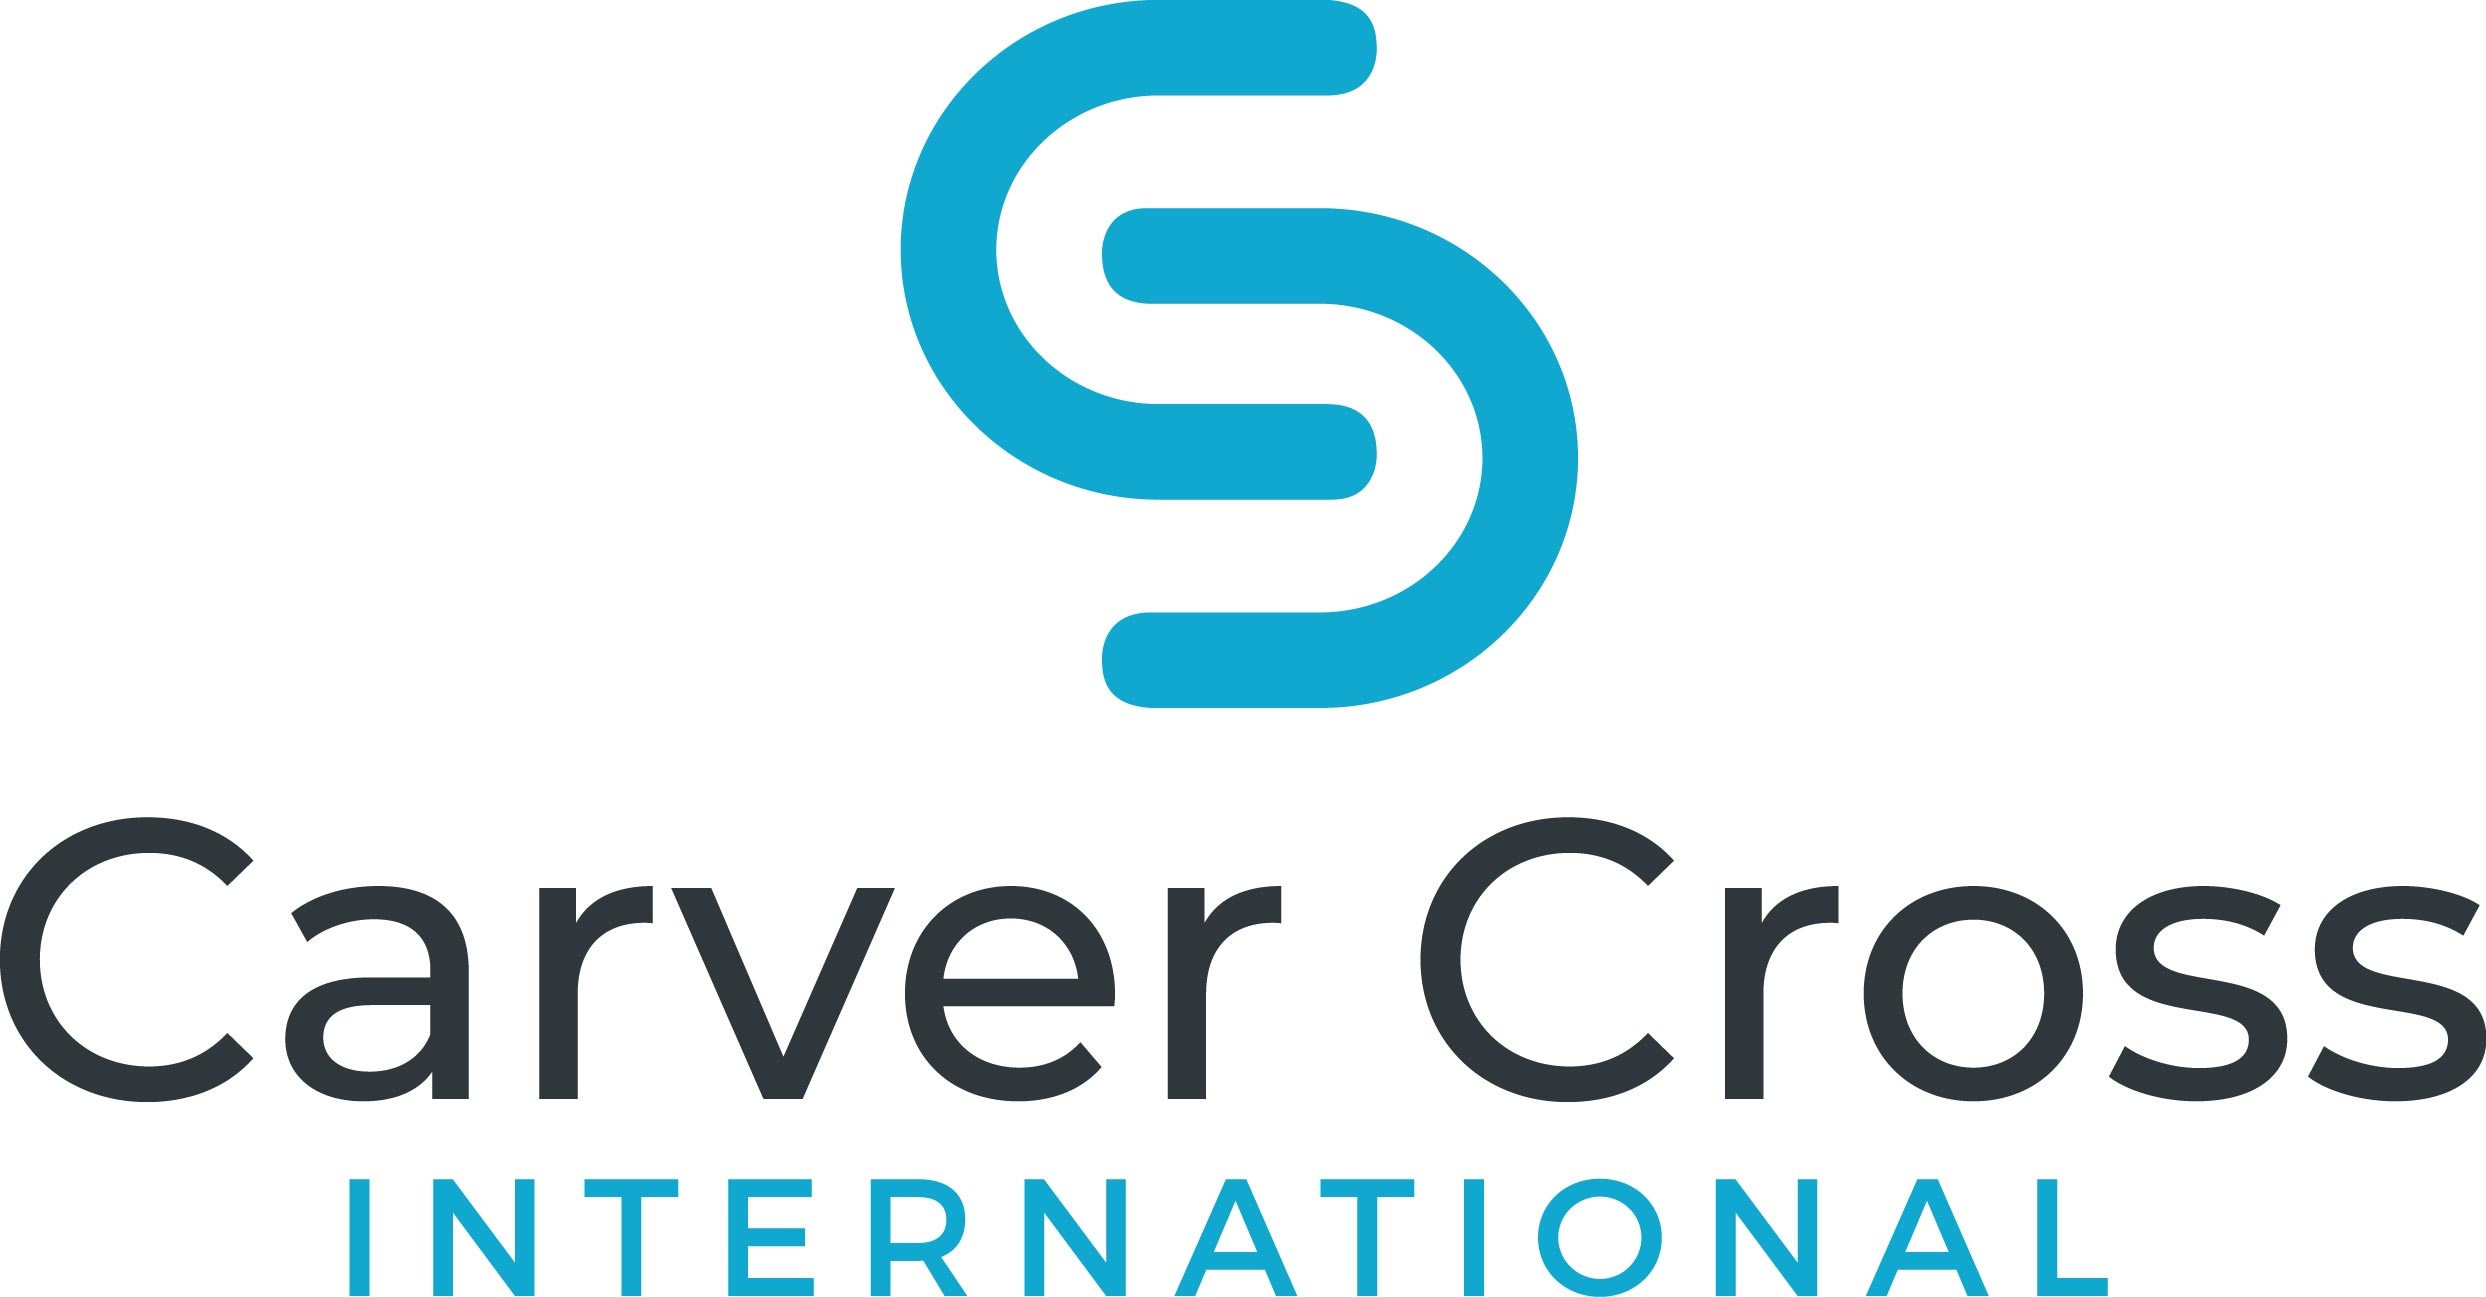 Carver Cross International